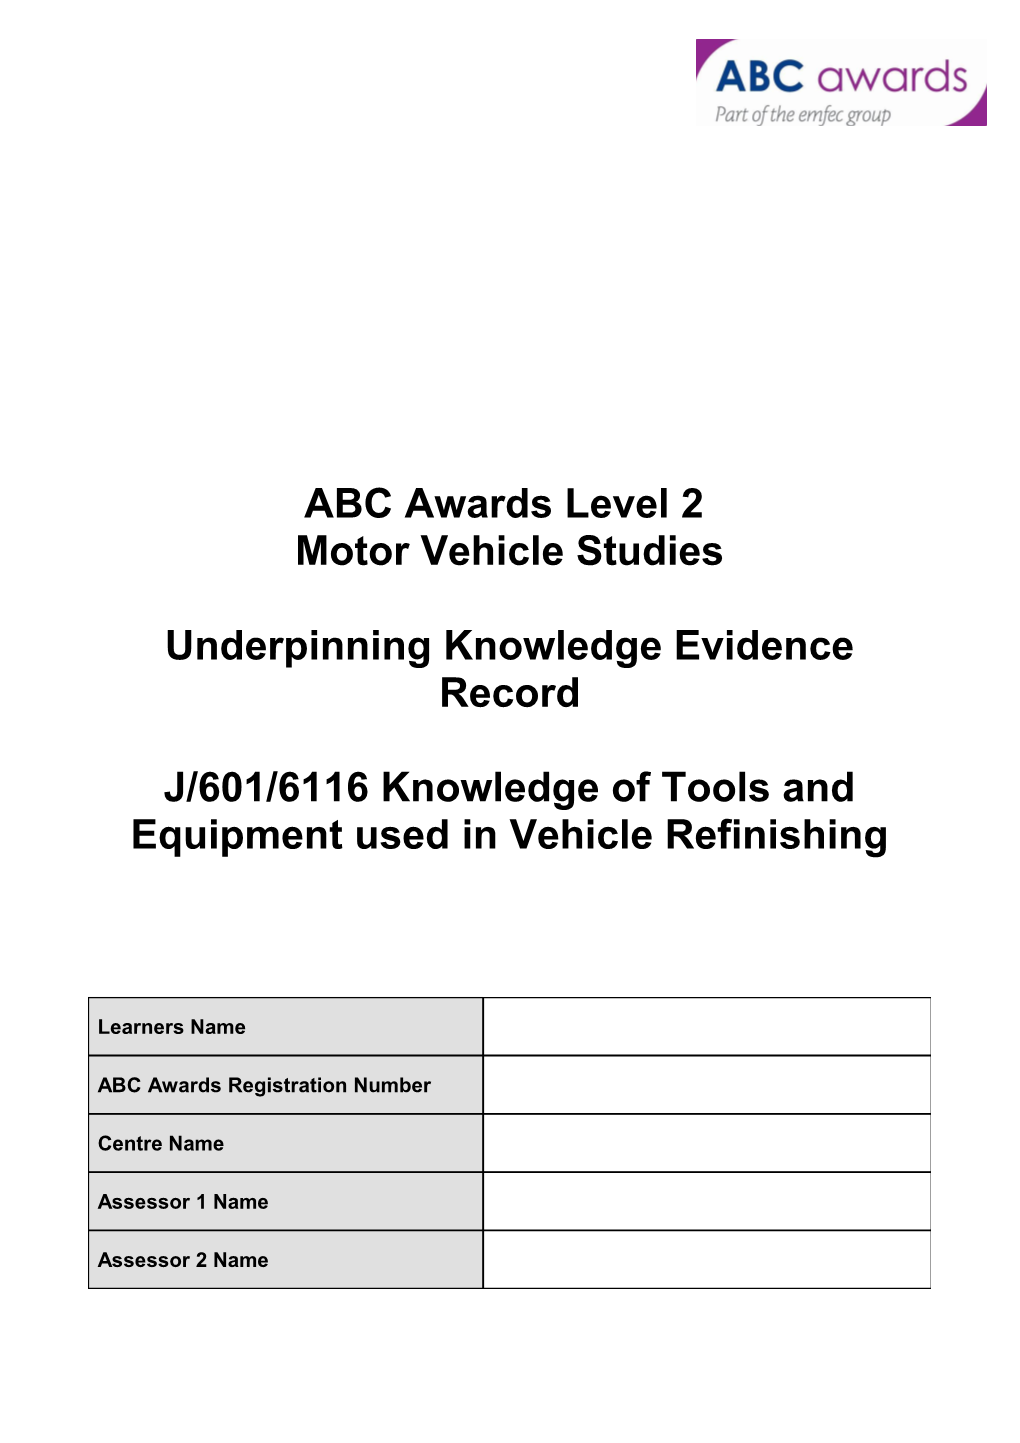 Level 2 Award in Motor Vehicle Studies